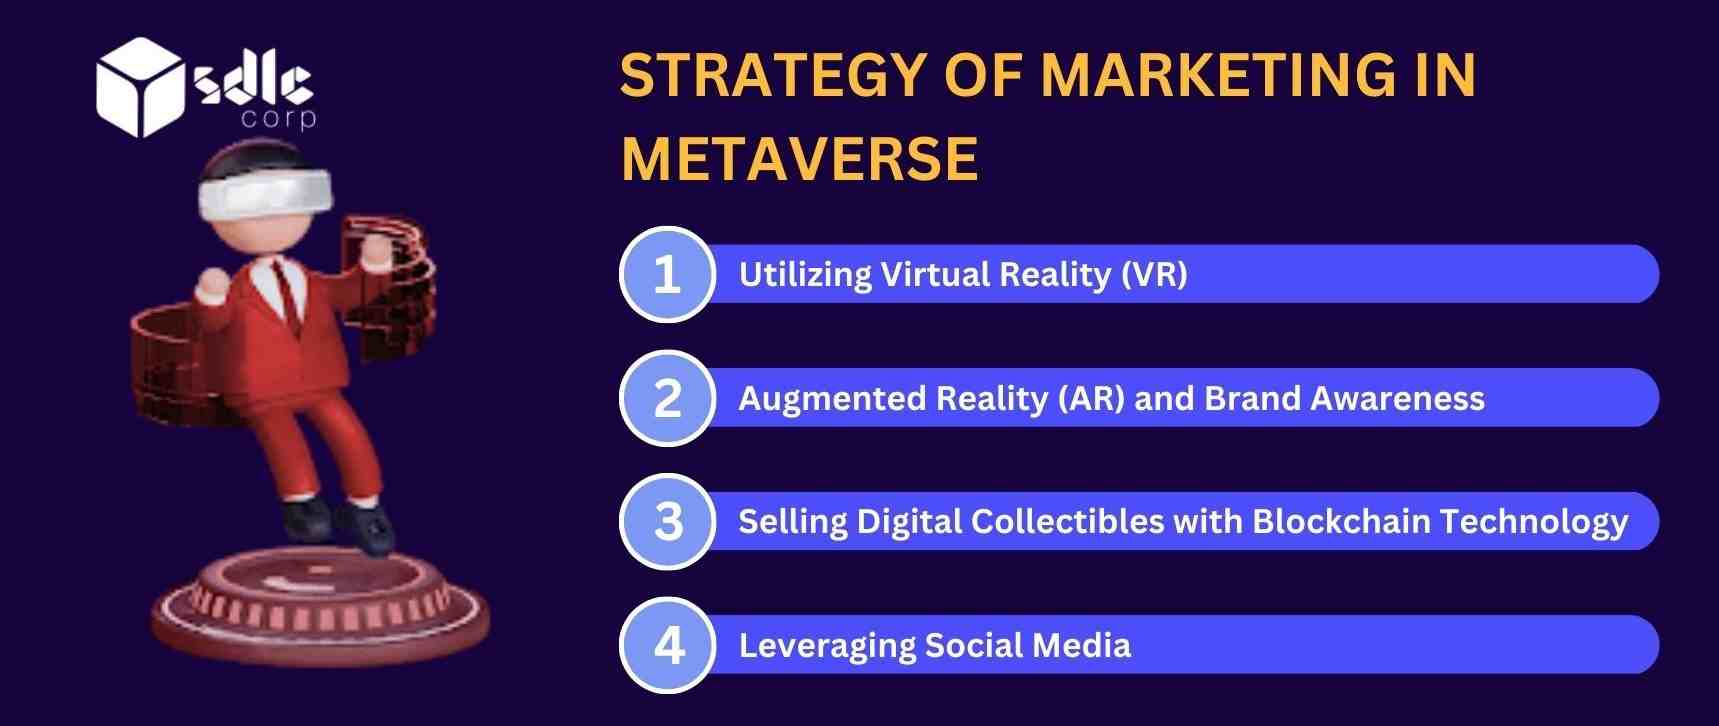 Strategies of marketing in Metaverse - SDLC Corp